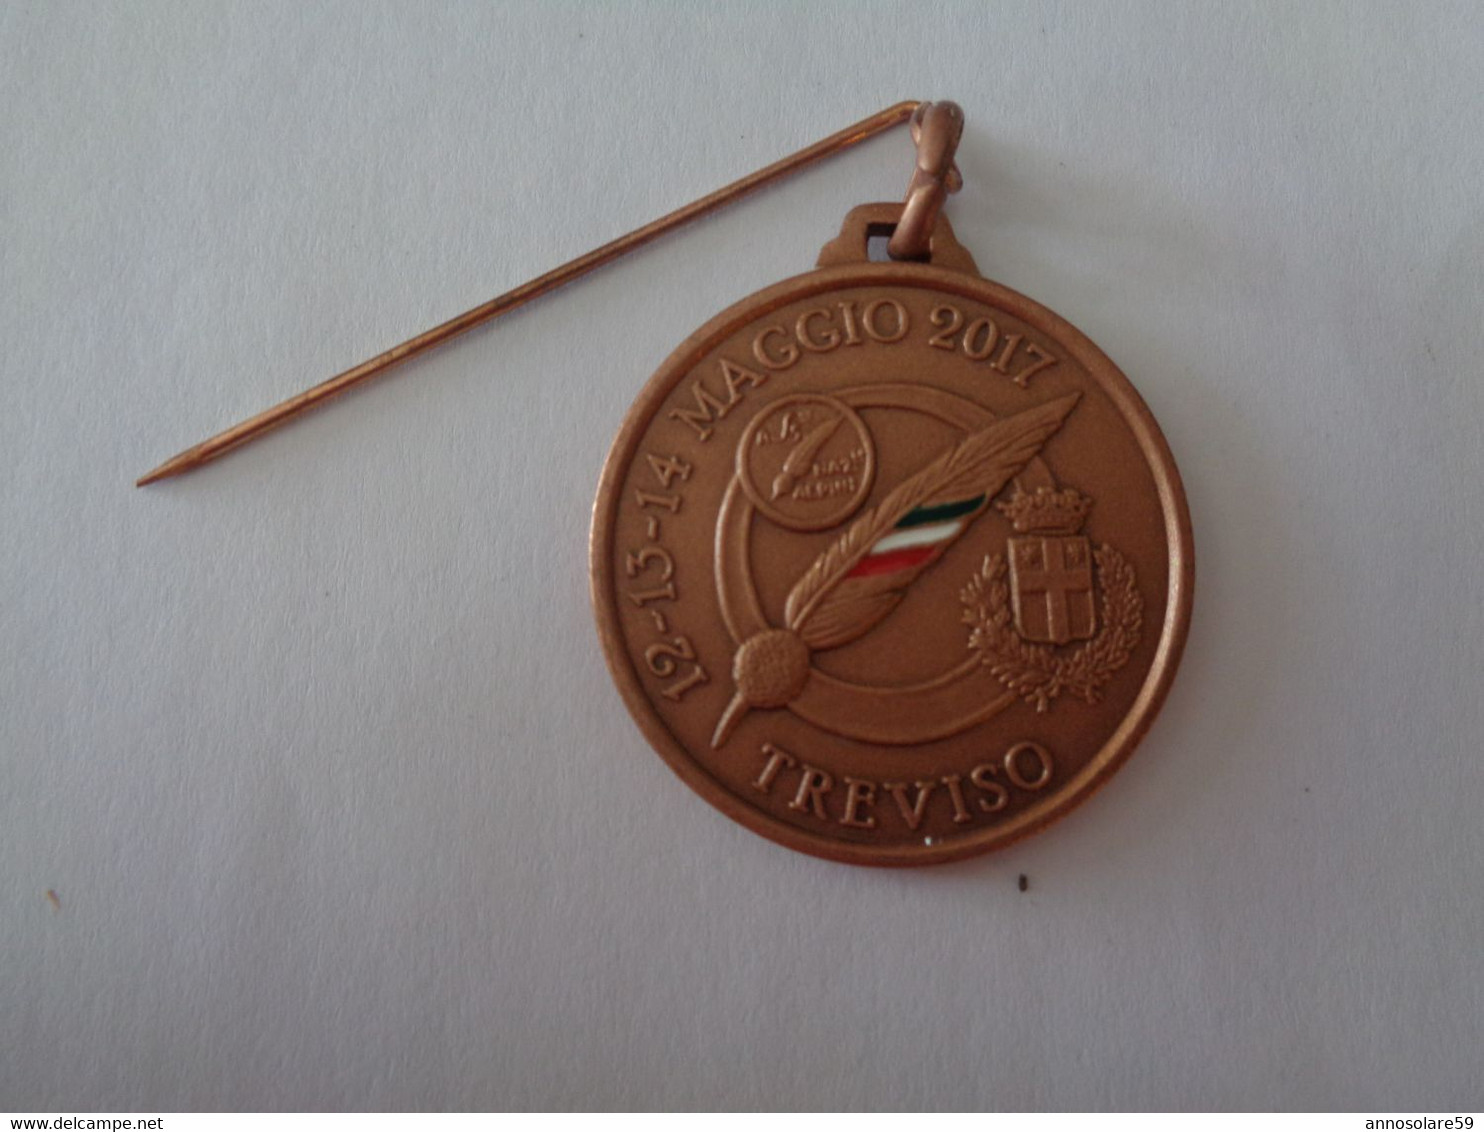 Medal, Medaglia Adunata Treviso 2017 - A.N.A. Associazione Nazionale Alpini  - LEGGI - Italië